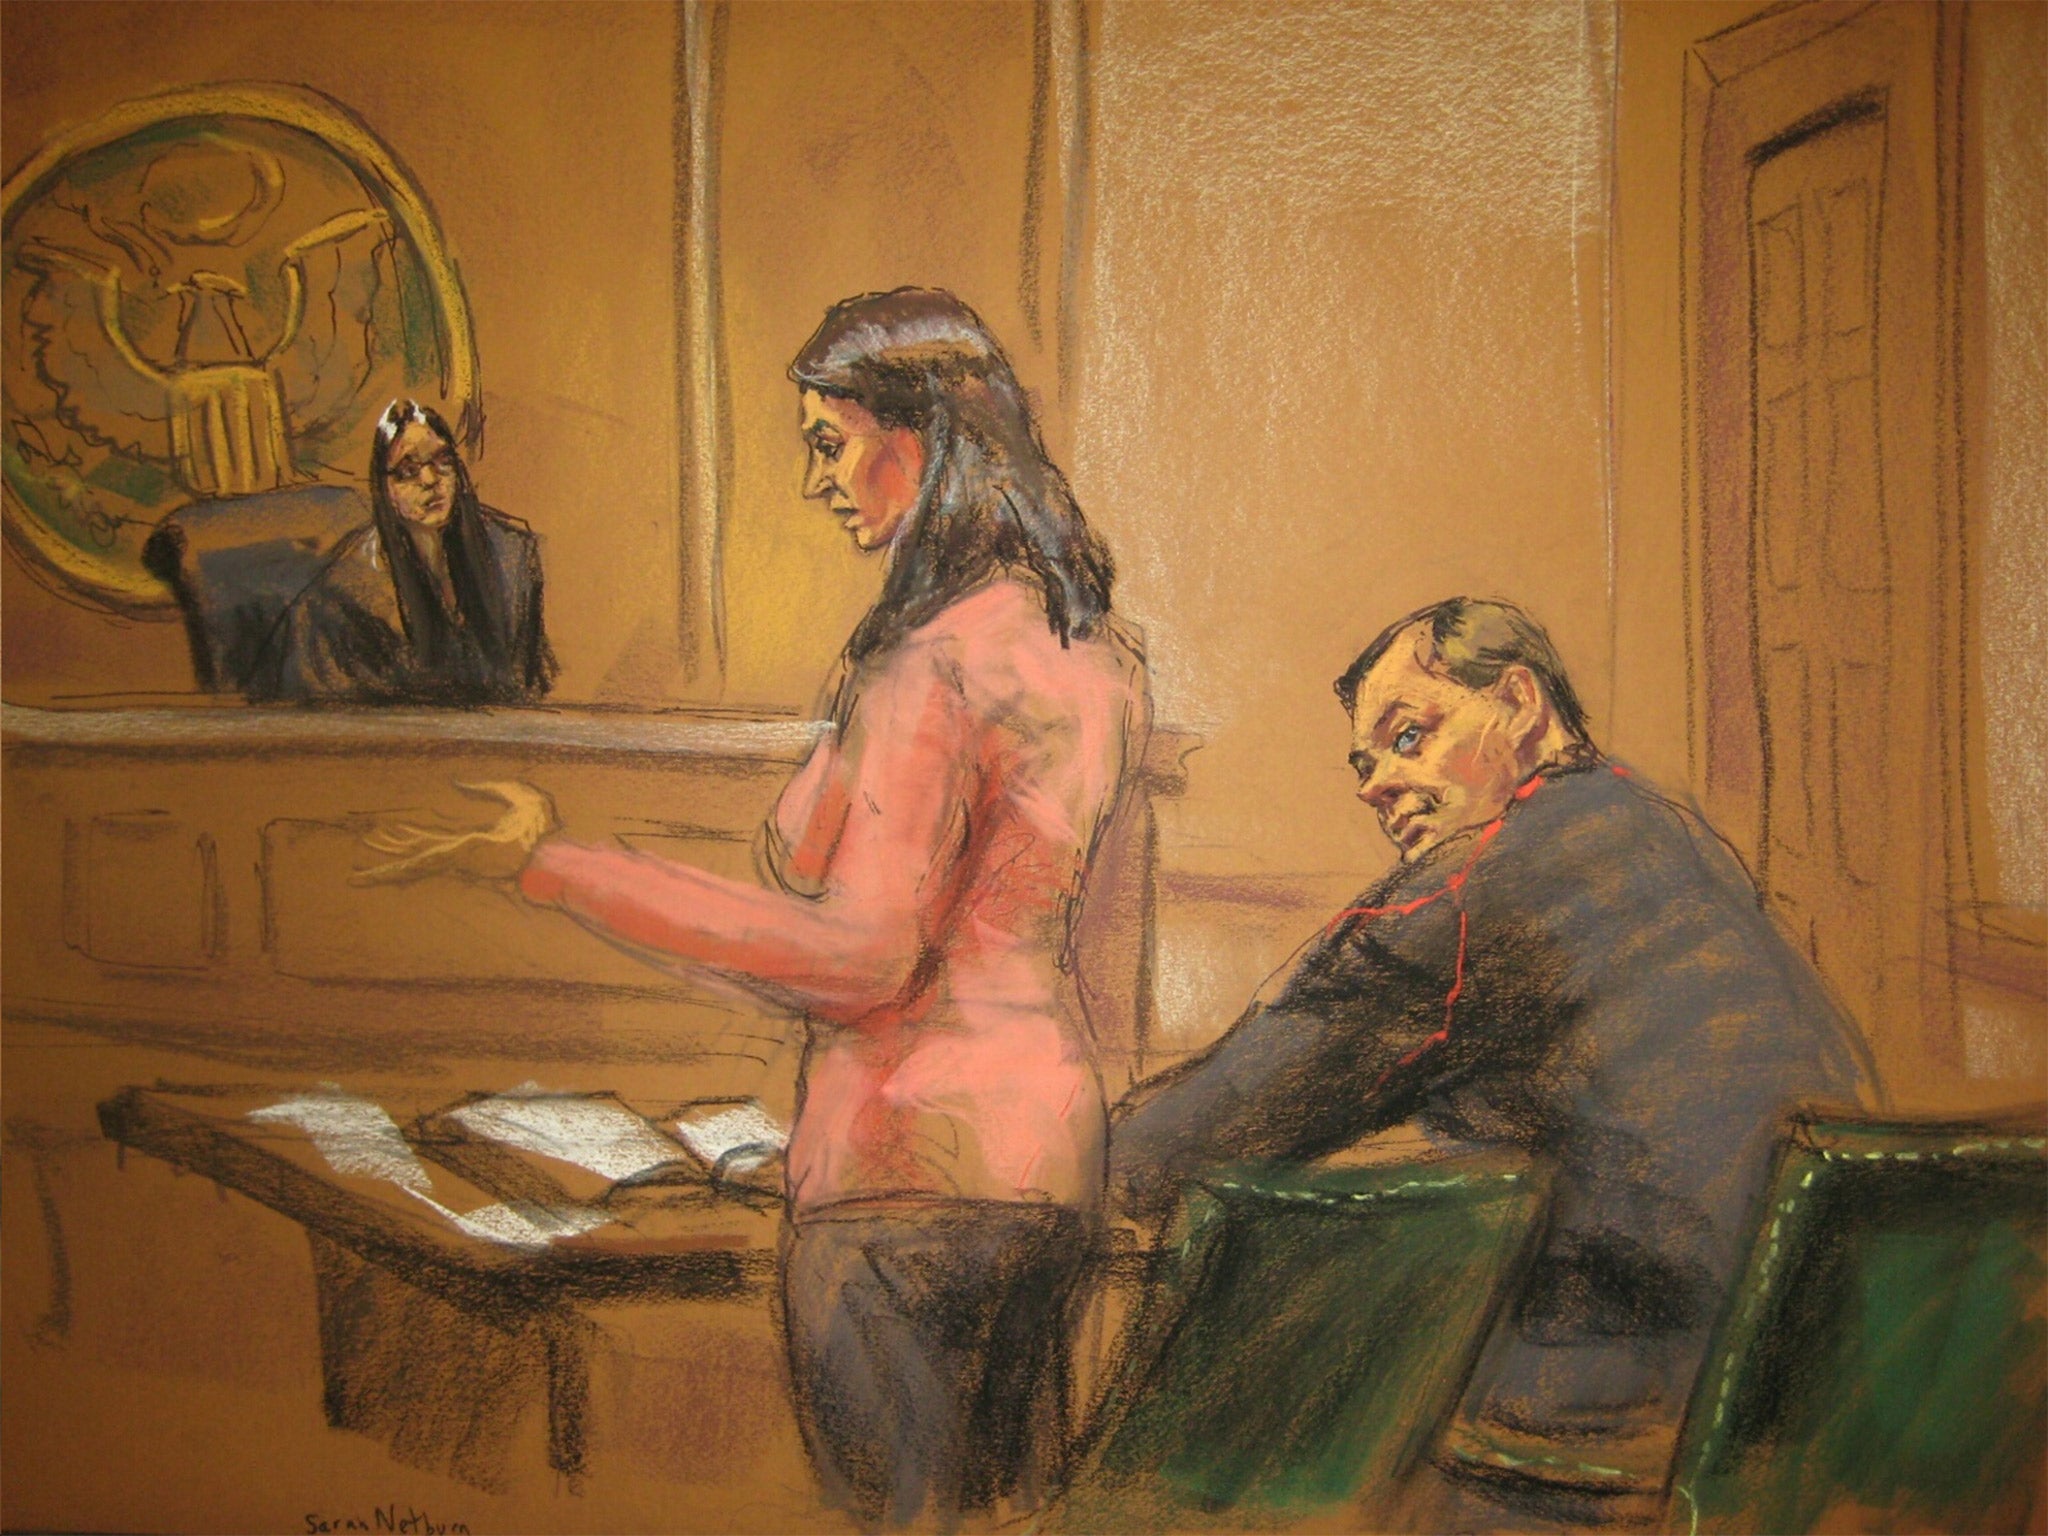 Judge Sarah Netburn listens to defence attorney Sabrina Shroff as Evgeny Buryakov sits in court in New York